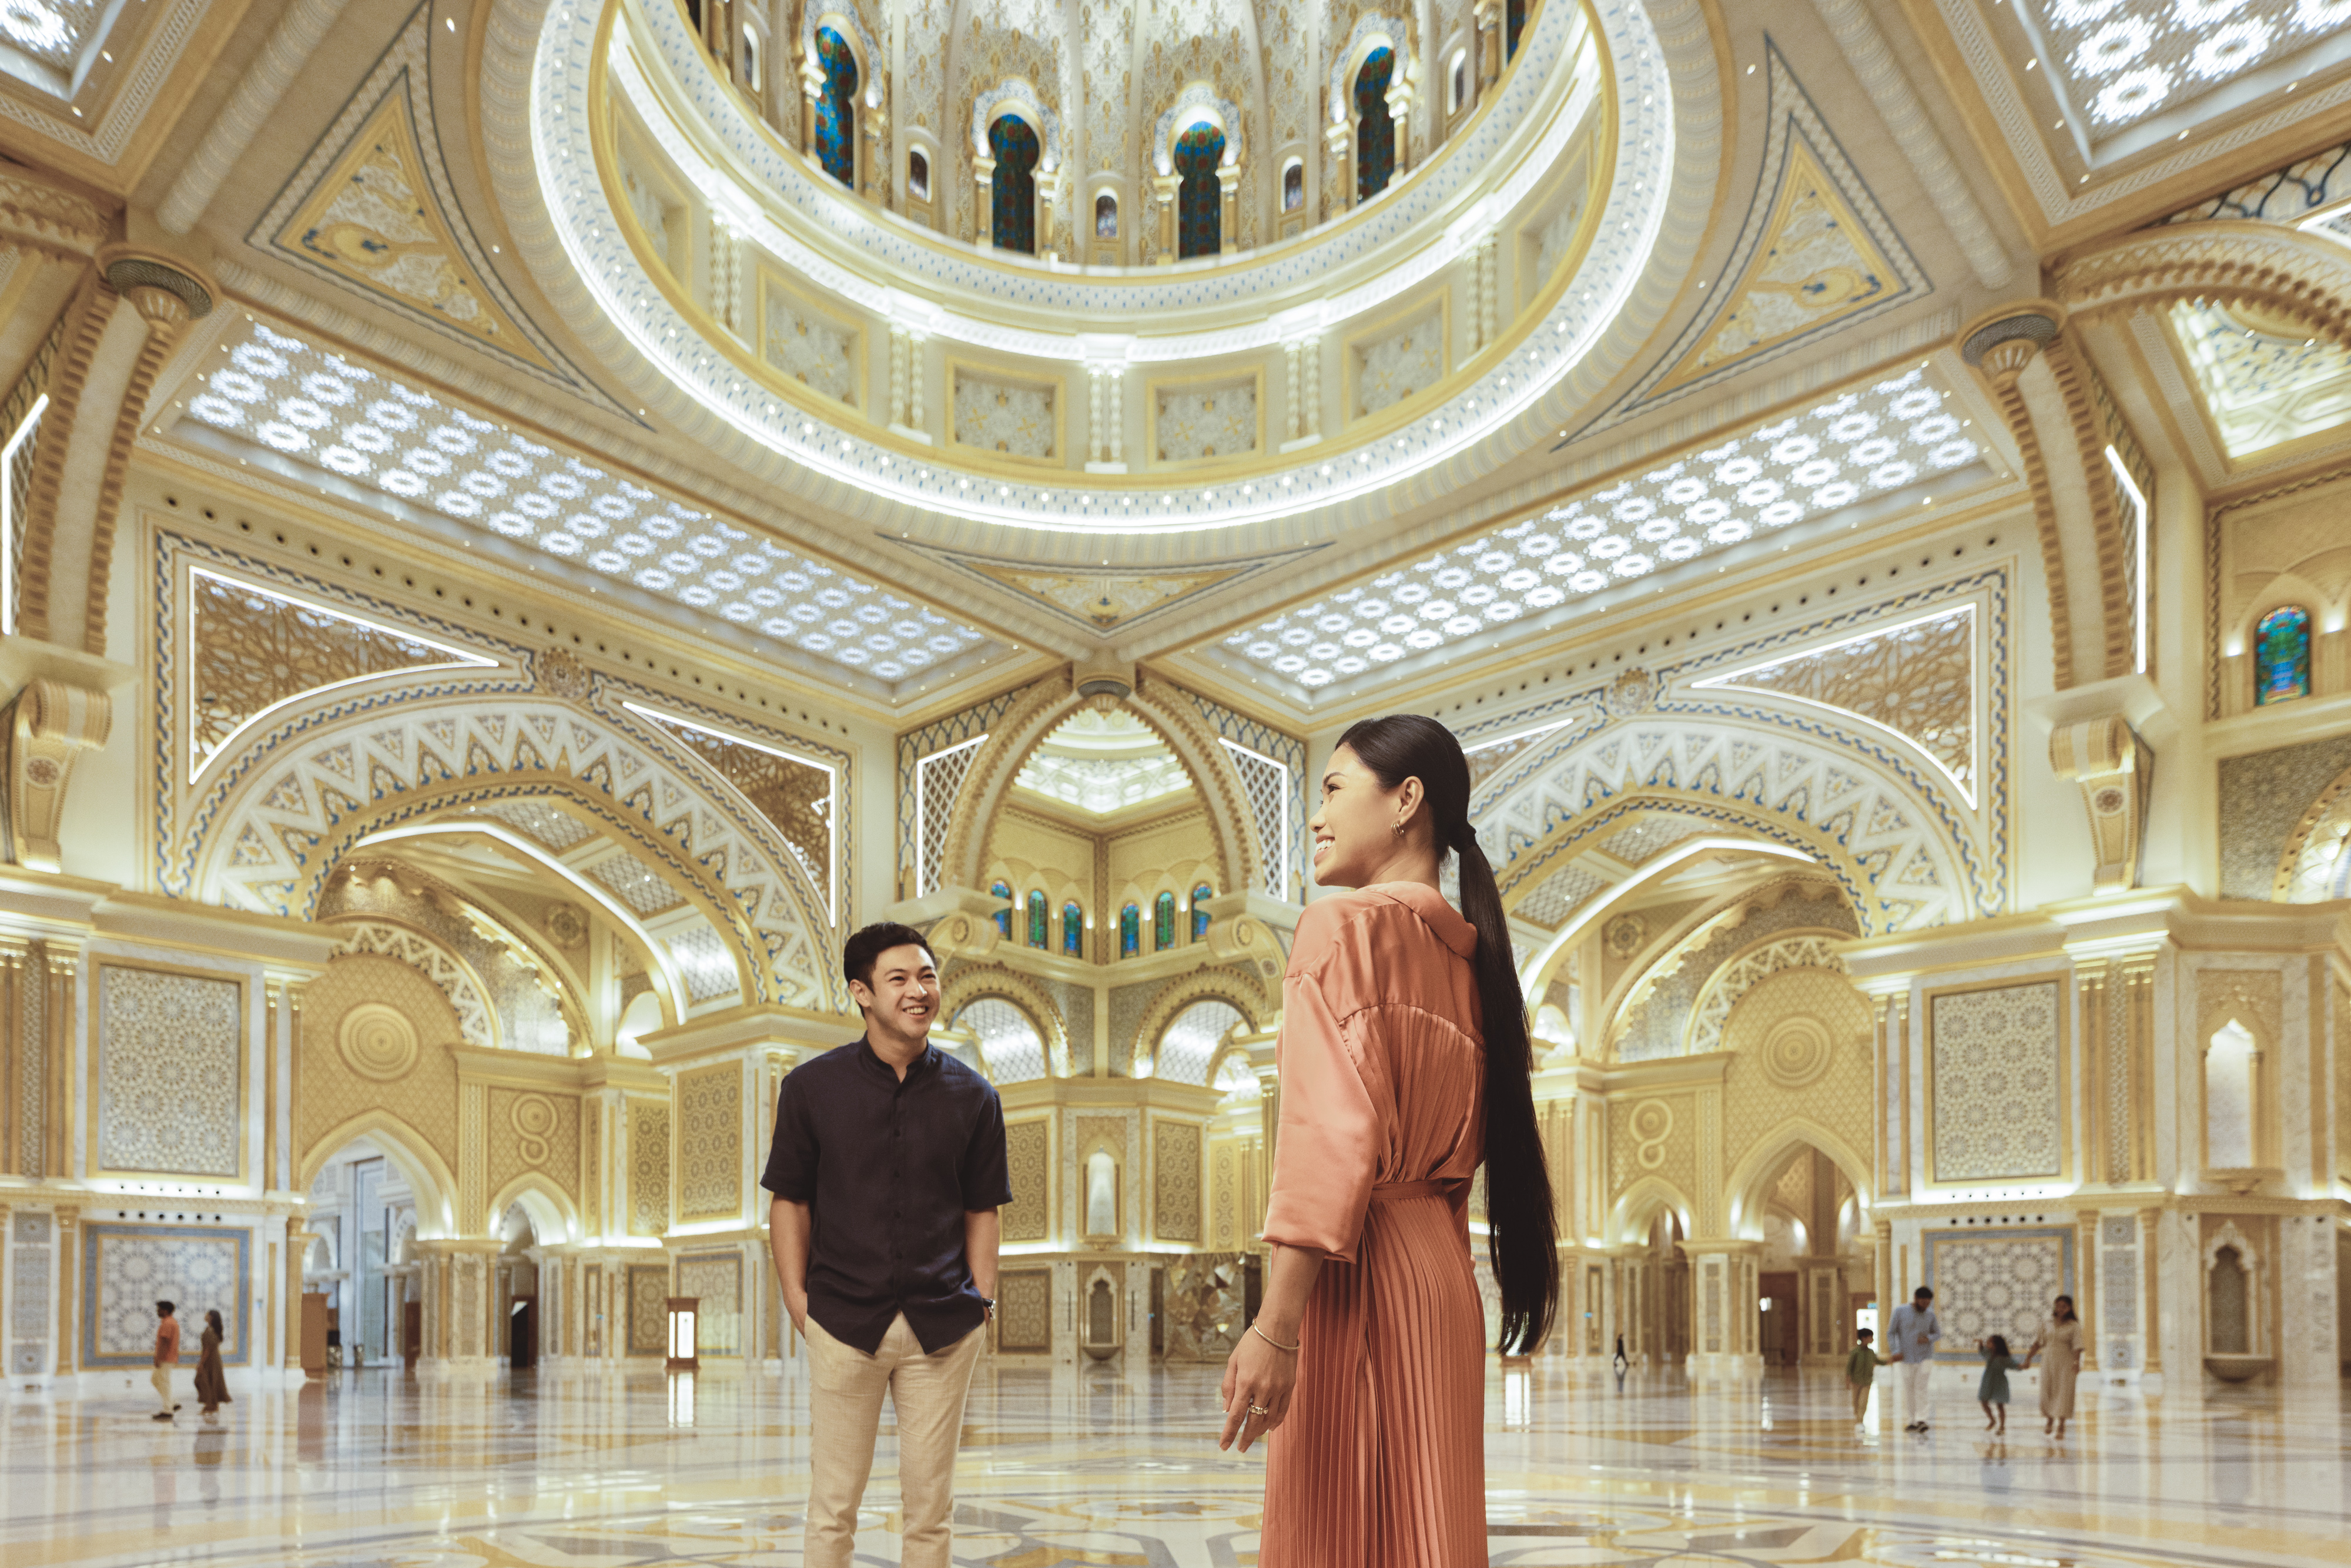 Asian couple smiling in Qasr Al Watan palace courtyard in Abu Dhabi